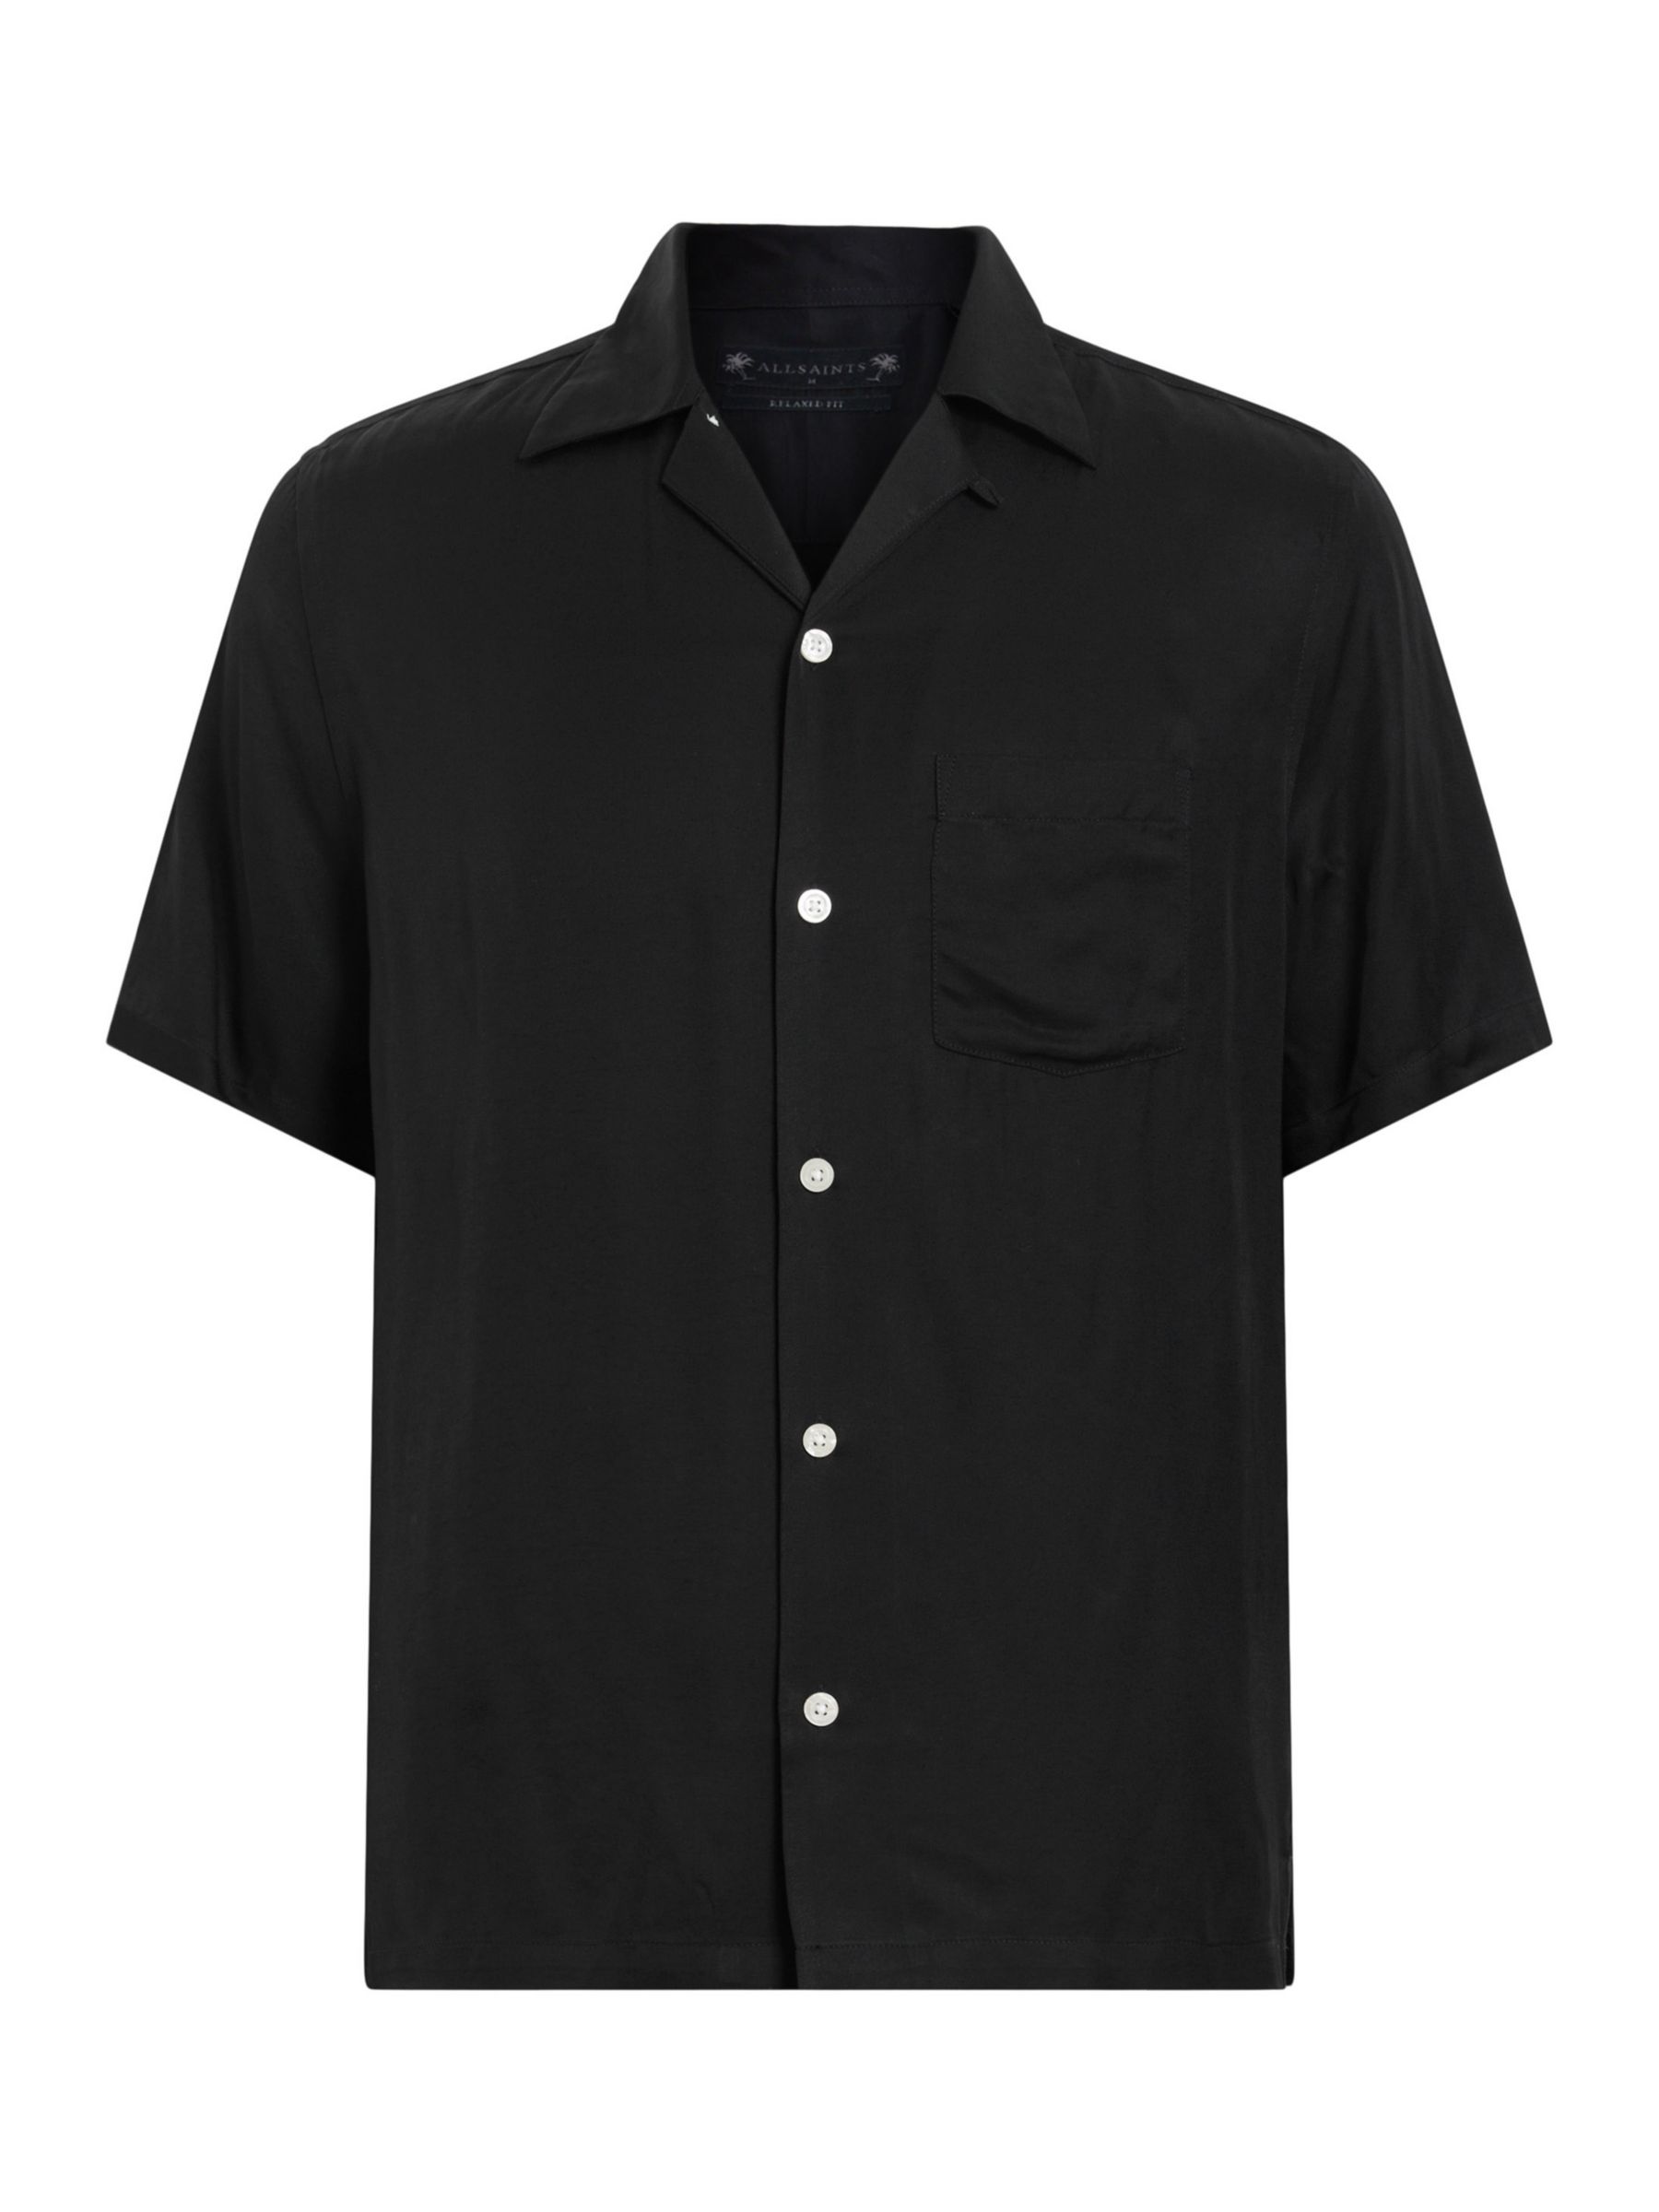 AllSaints Sunsmirk Embroidered Relaxed Fit Shirt, Jet Black, L